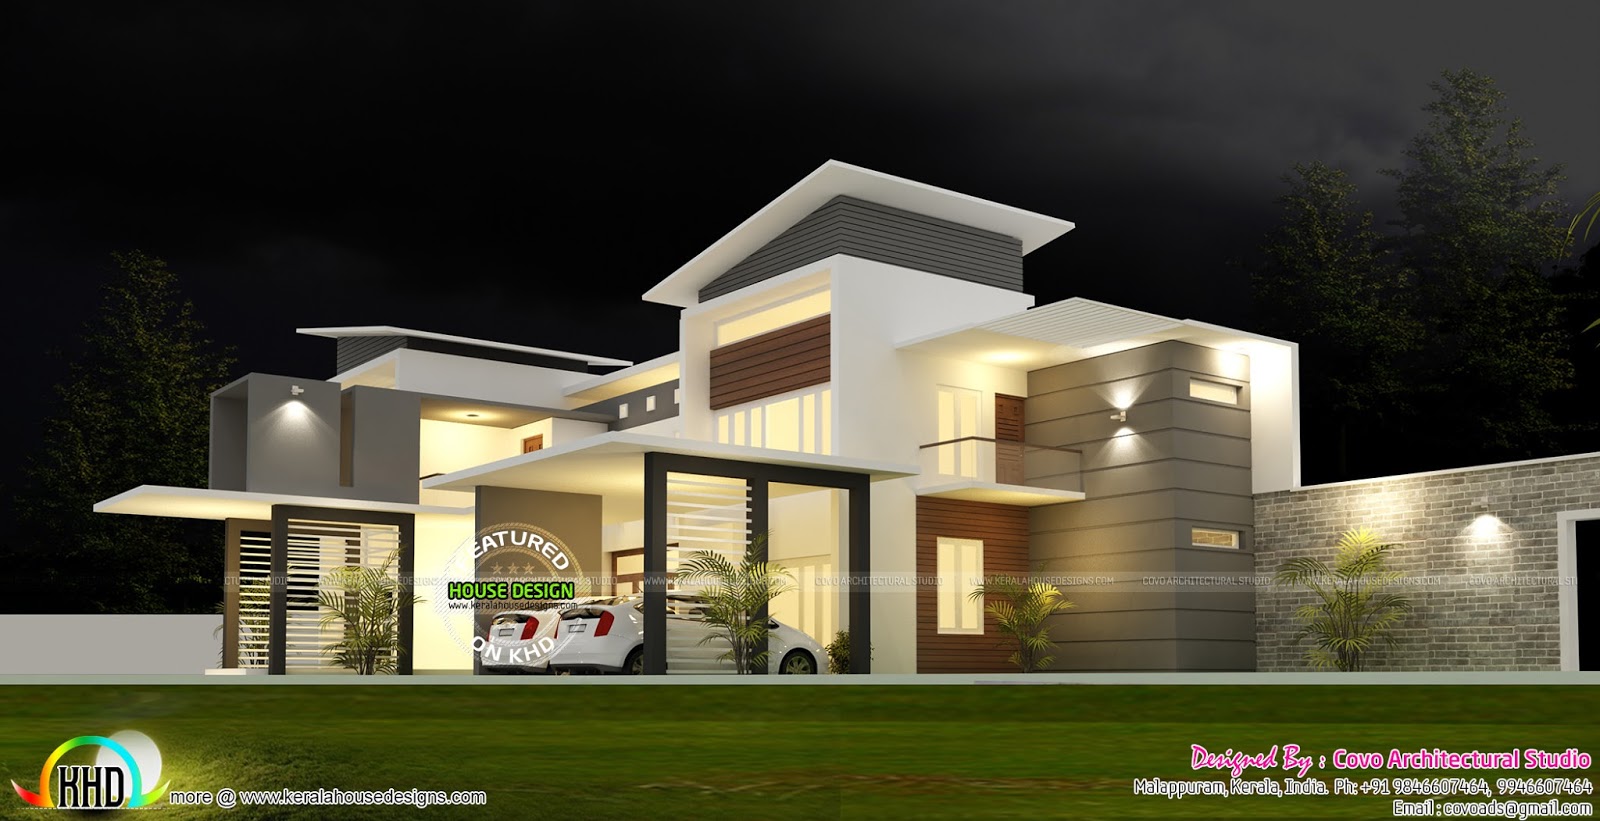  5  bedroom  modern  contemporary  house  Kerala home  design 